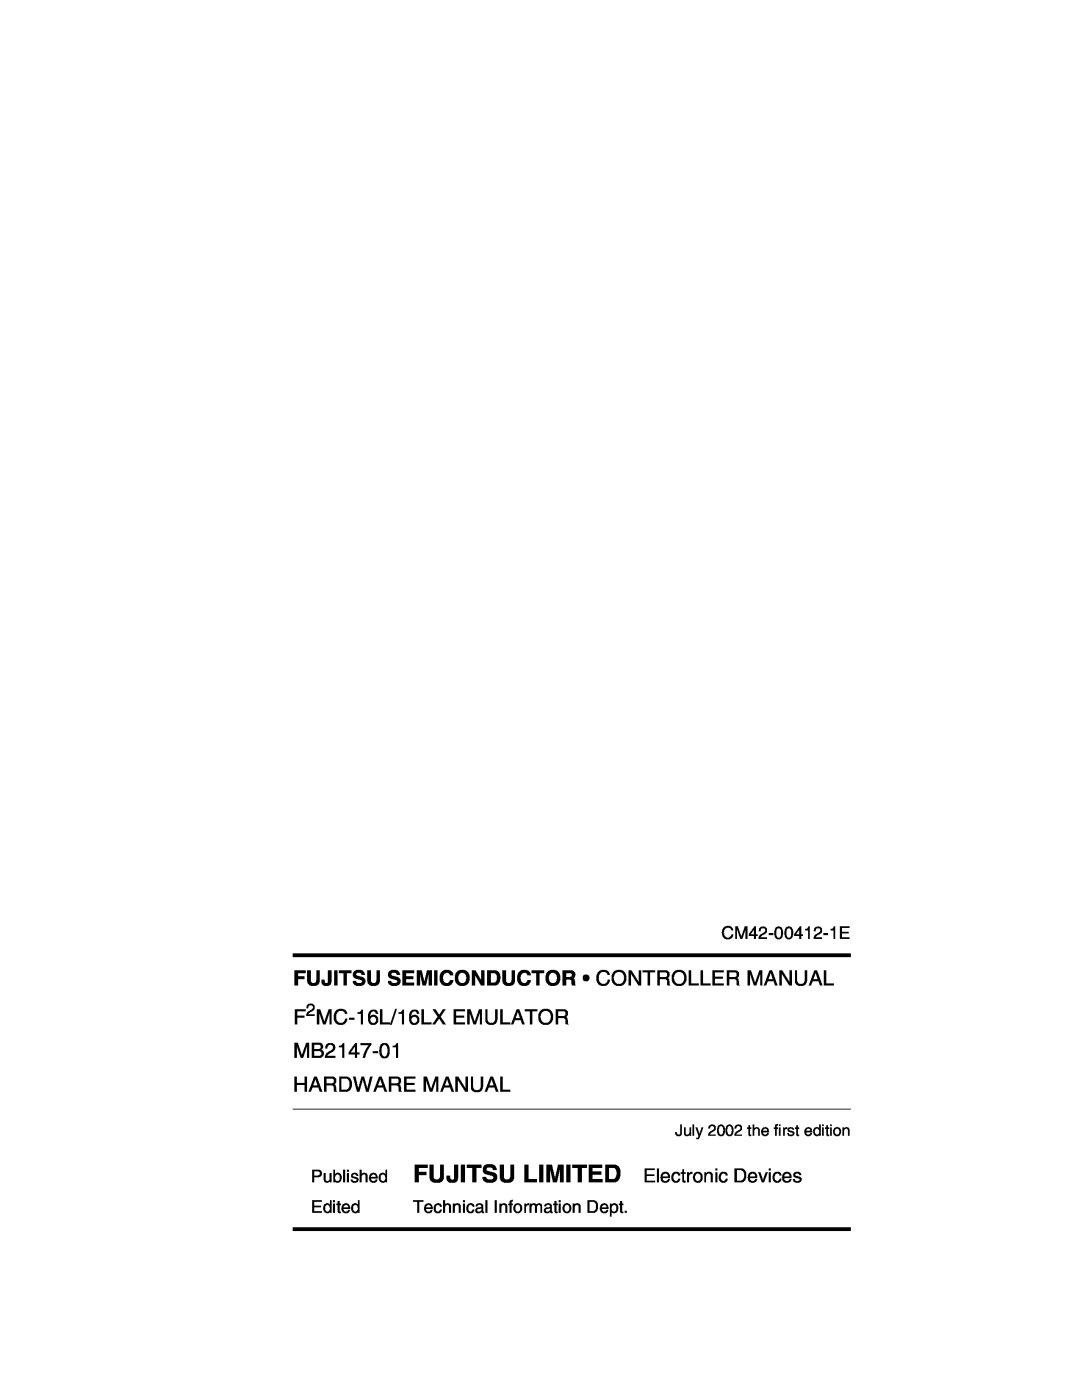 Fujitsu manual Fujitsu Semiconductor Controller Manual, F2MC-16L/16LX EMULATOR MB2147-01 HARDWARE MANUAL 